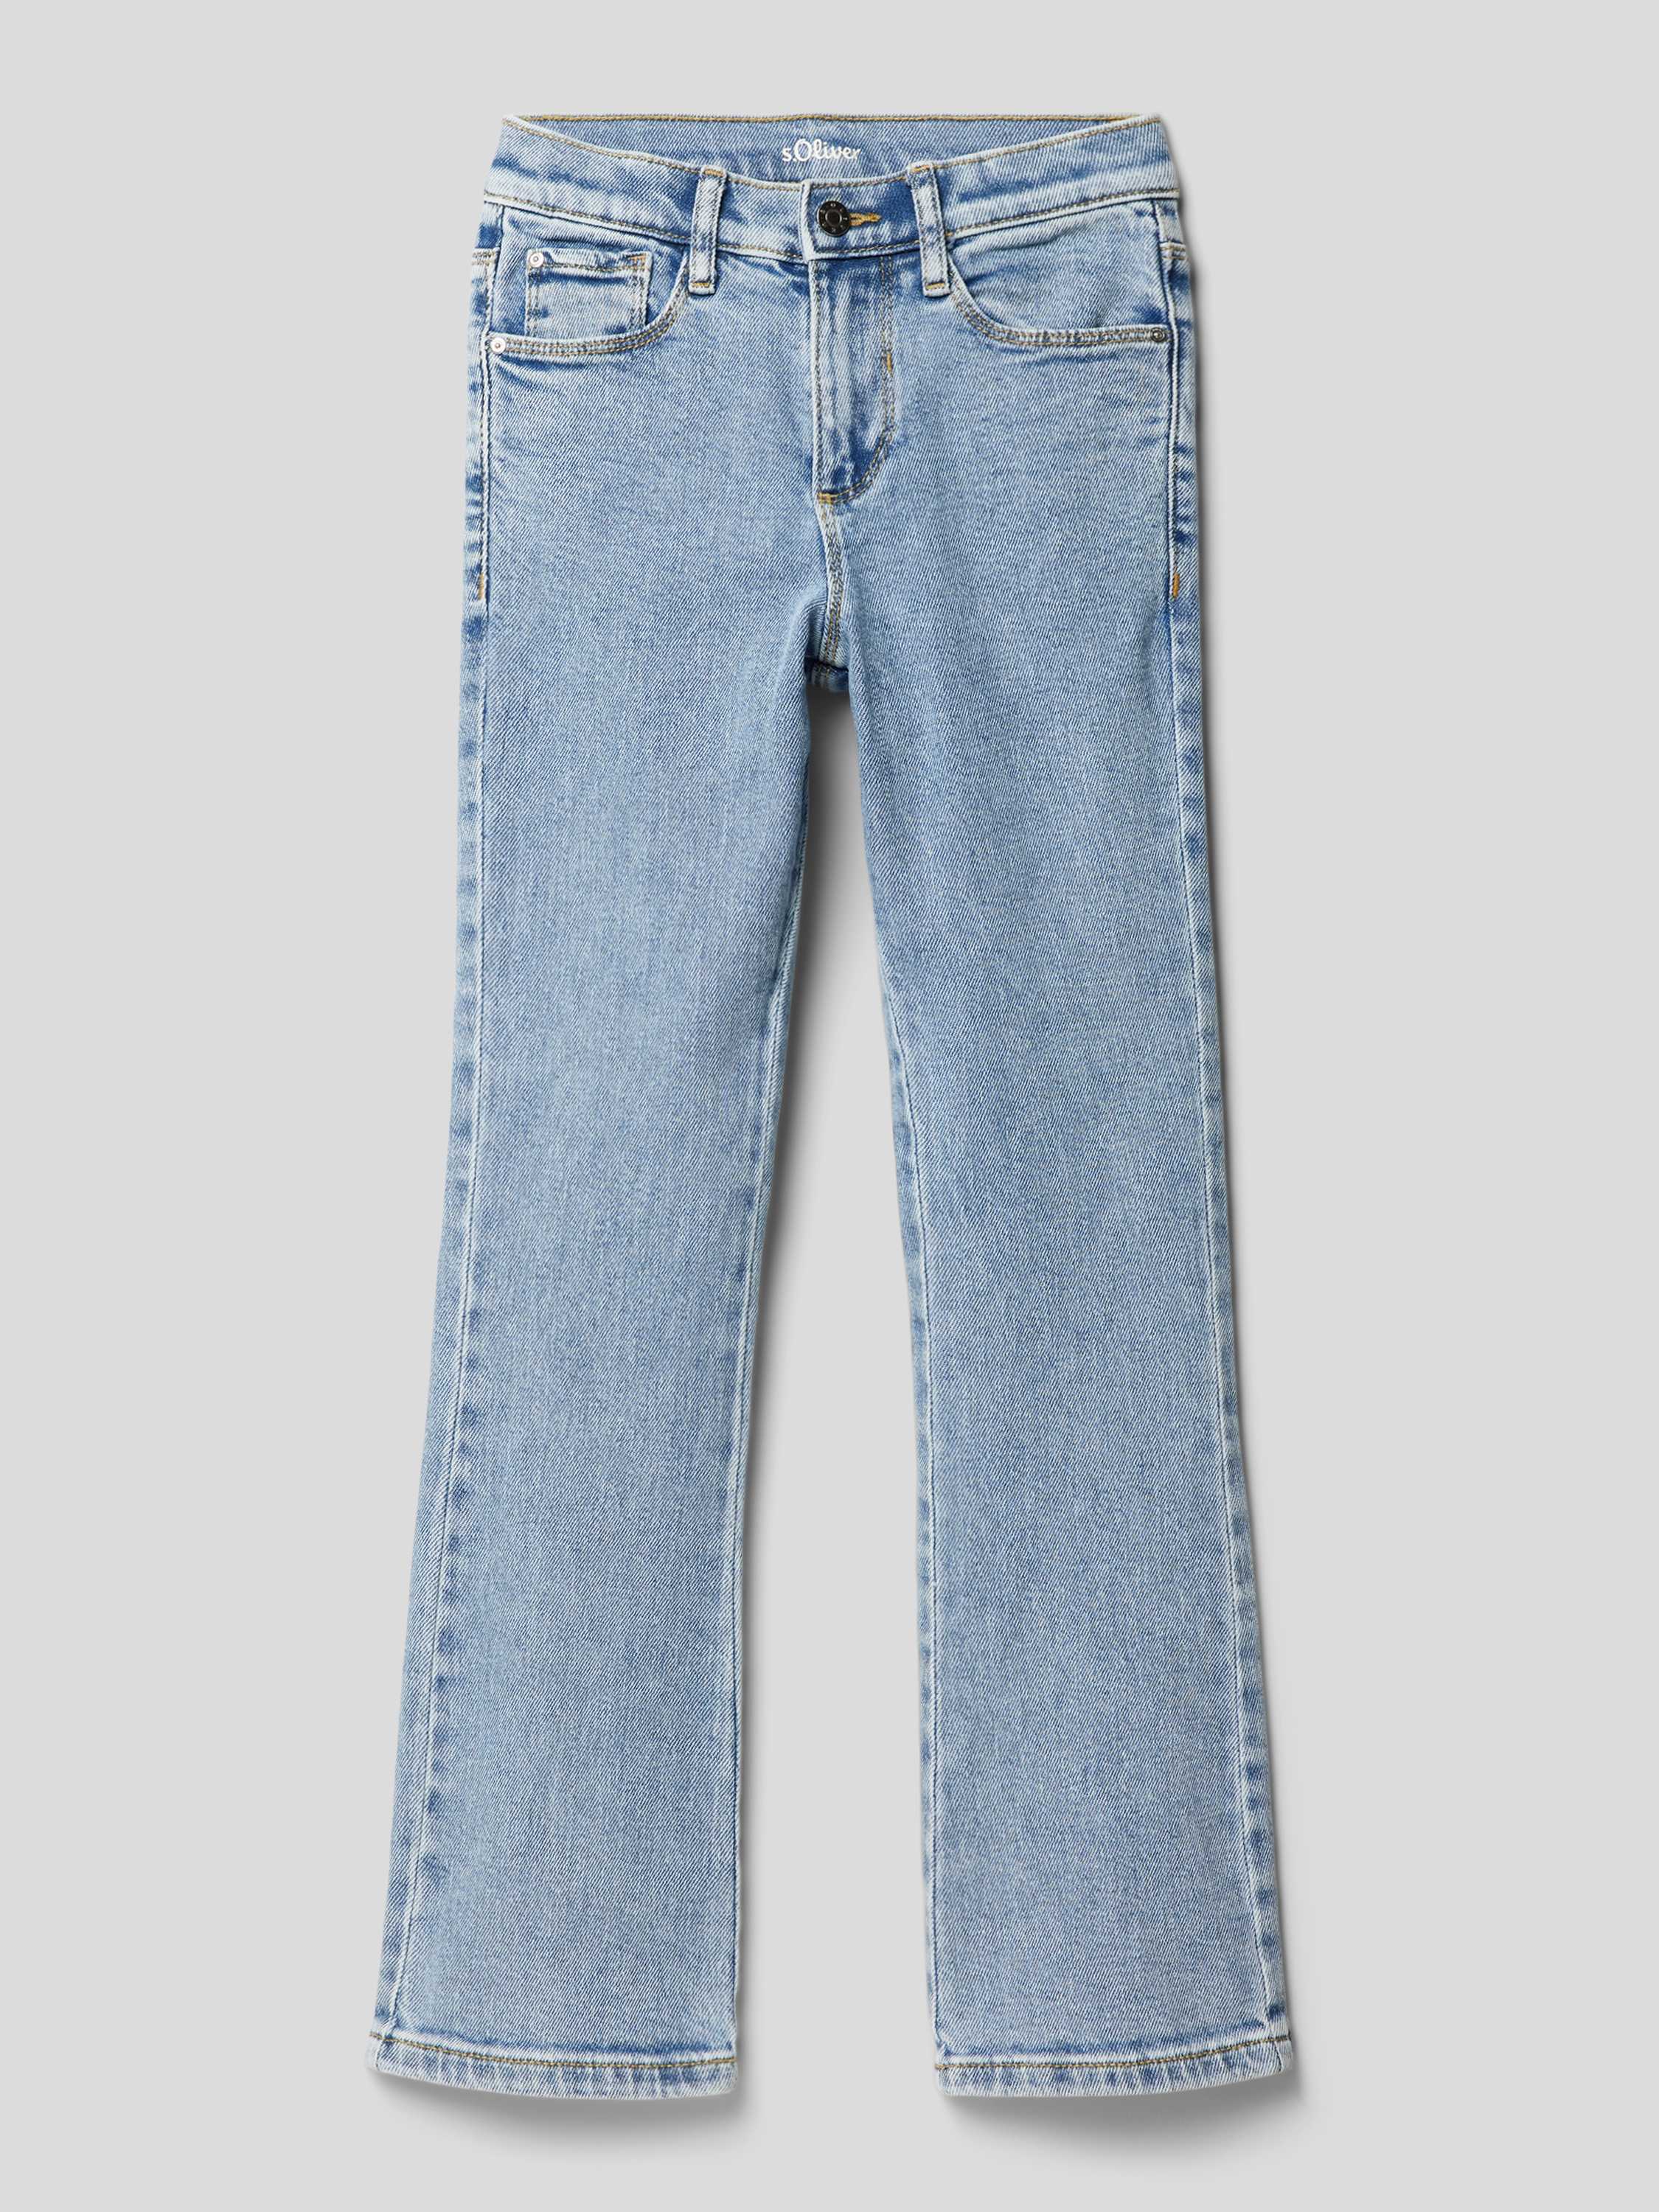 s.Oliver RED LABEL Slim fit jeans in 5-pocketmodel